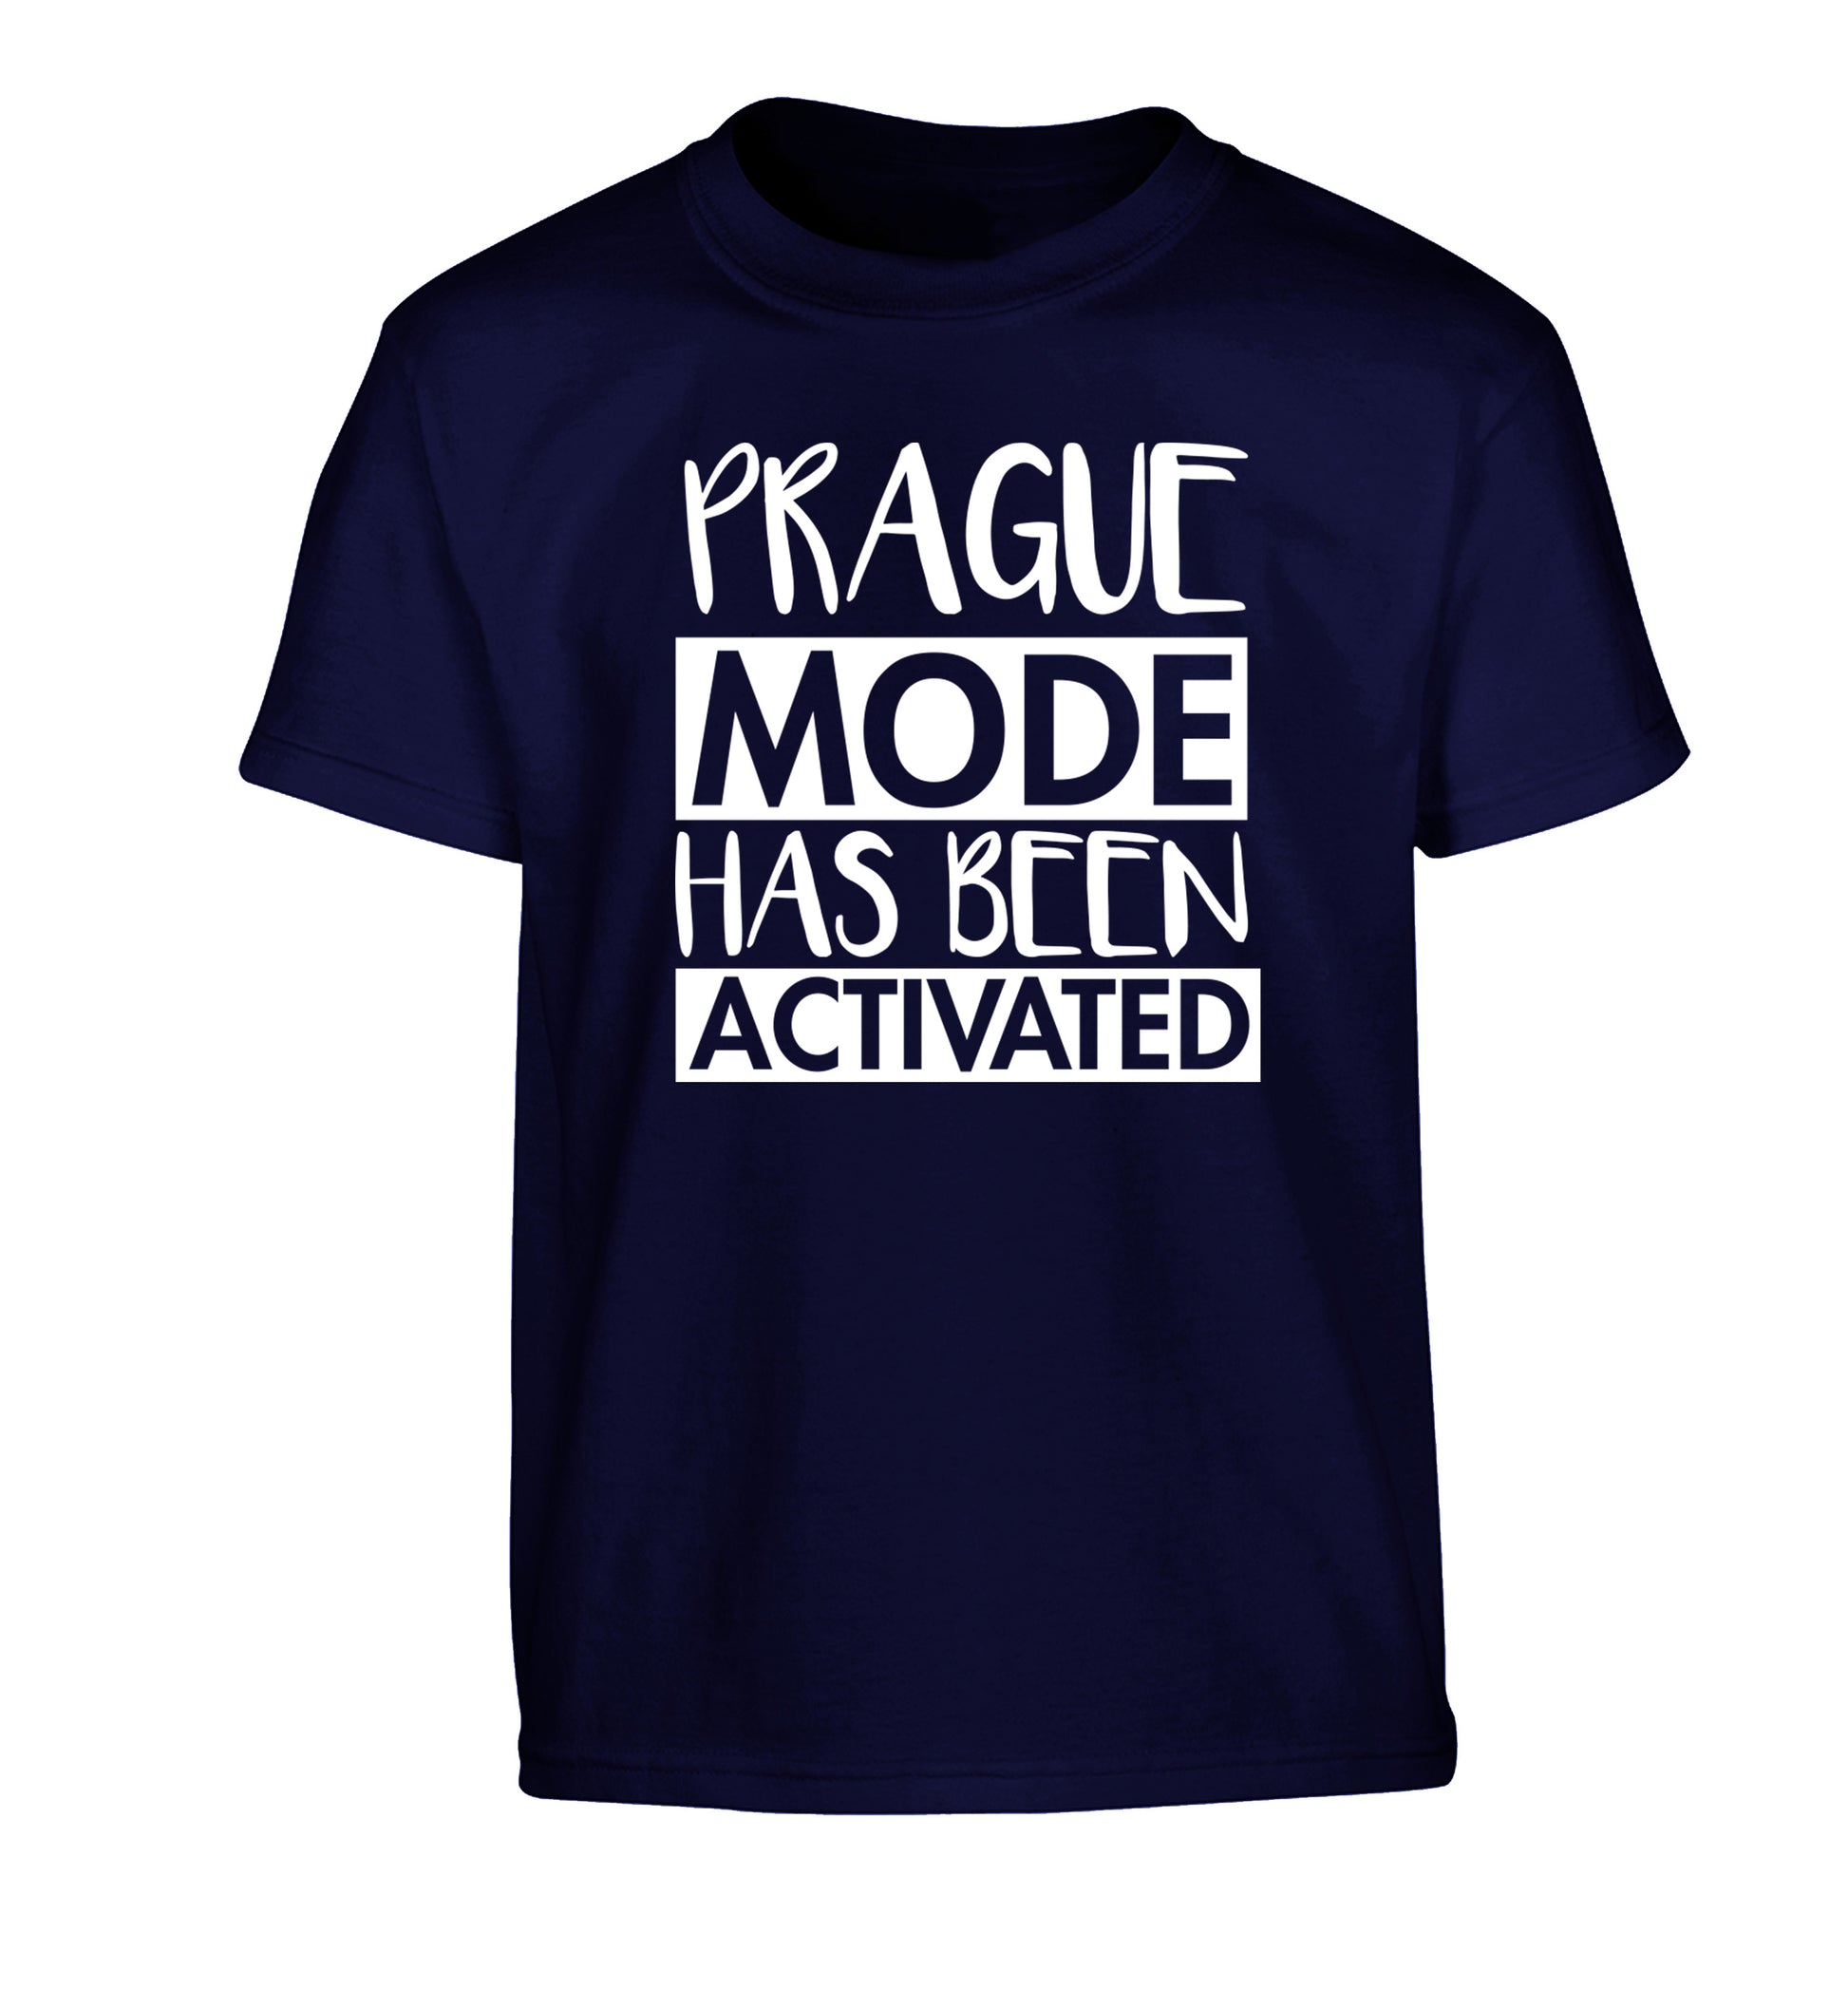 Prague mode has been activated Children's navy Tshirt 12-13 Years